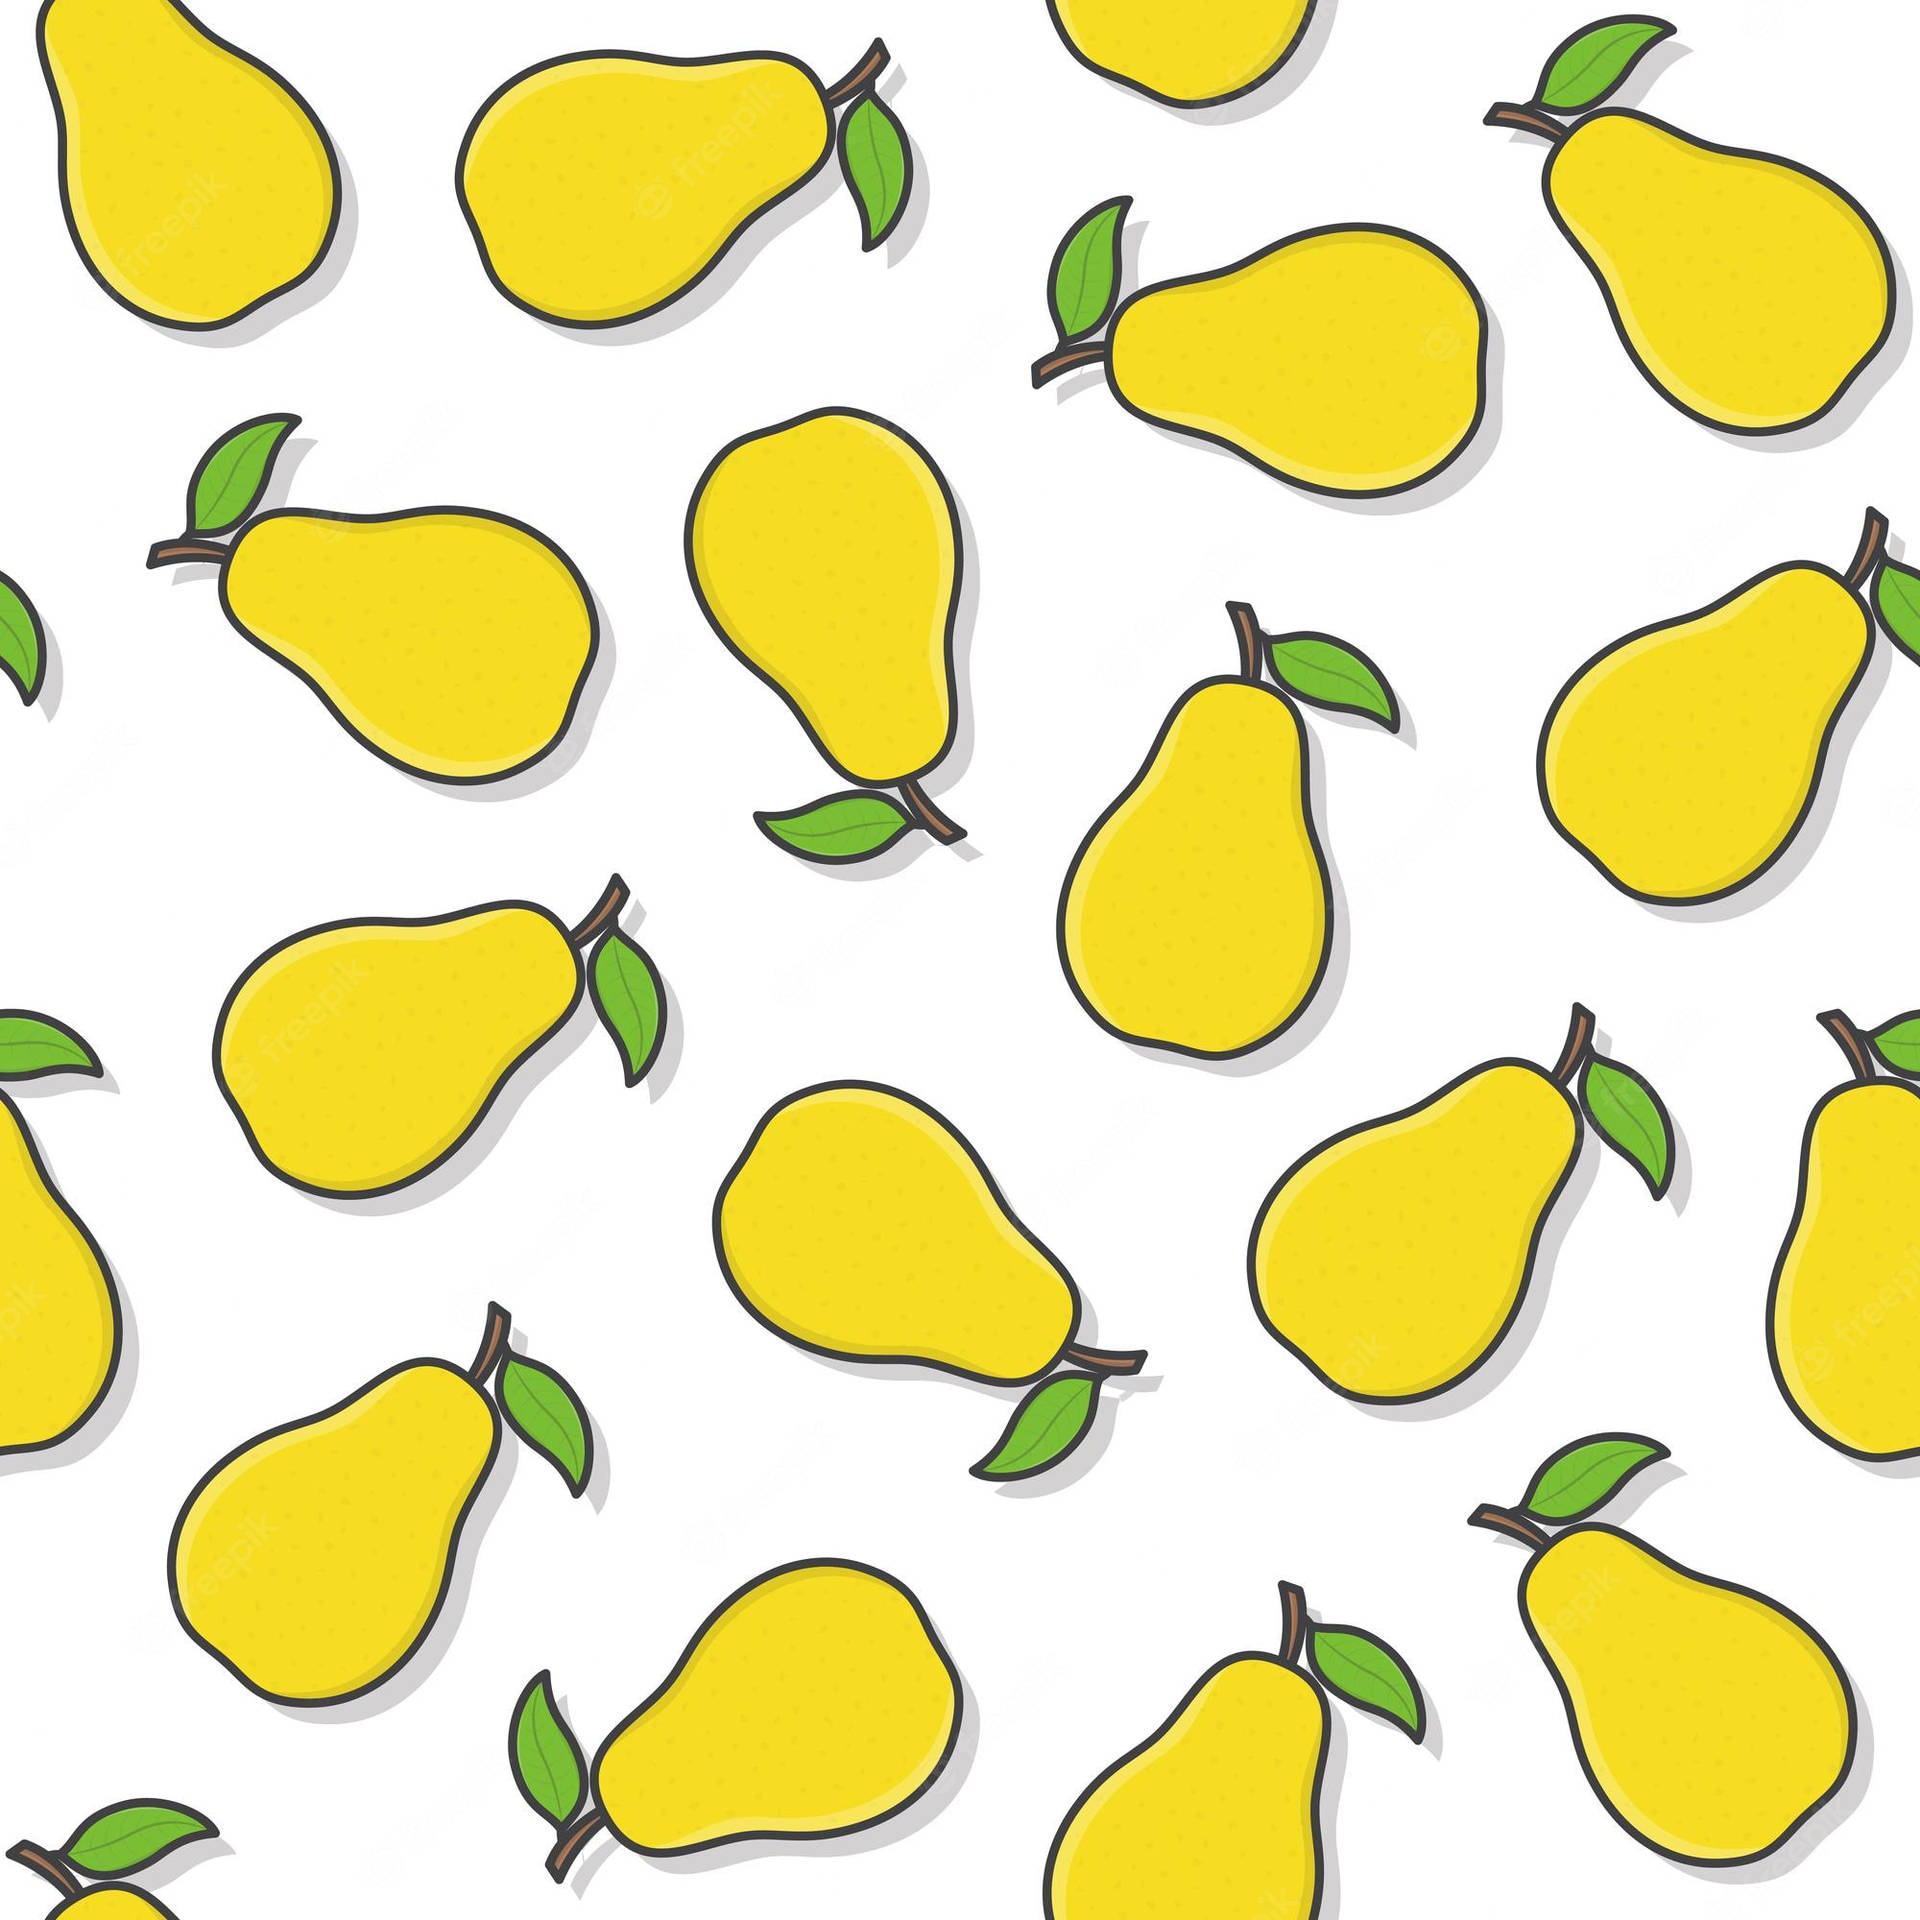 Pear Fruit Animation Wallpaper